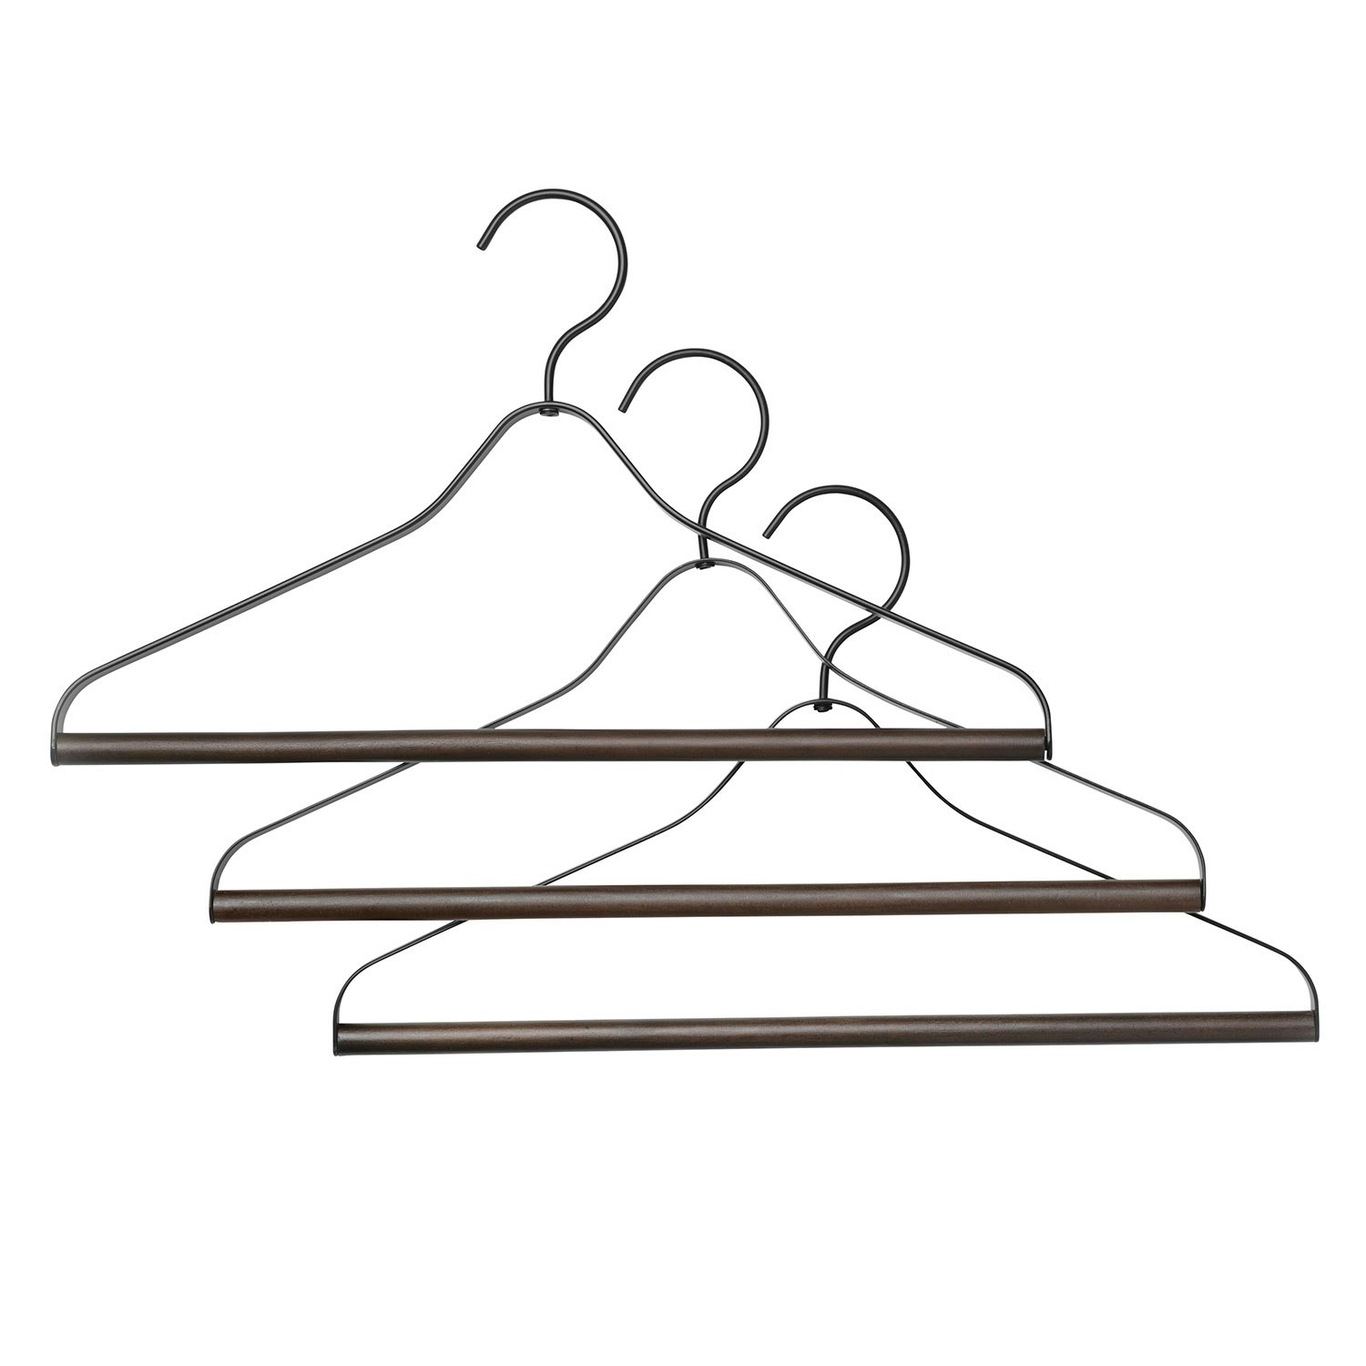 https://royaldesign.co.uk/image/6/ferm-living-coat-hanger-metal-wood-3-pack-0?w=800&quality=80